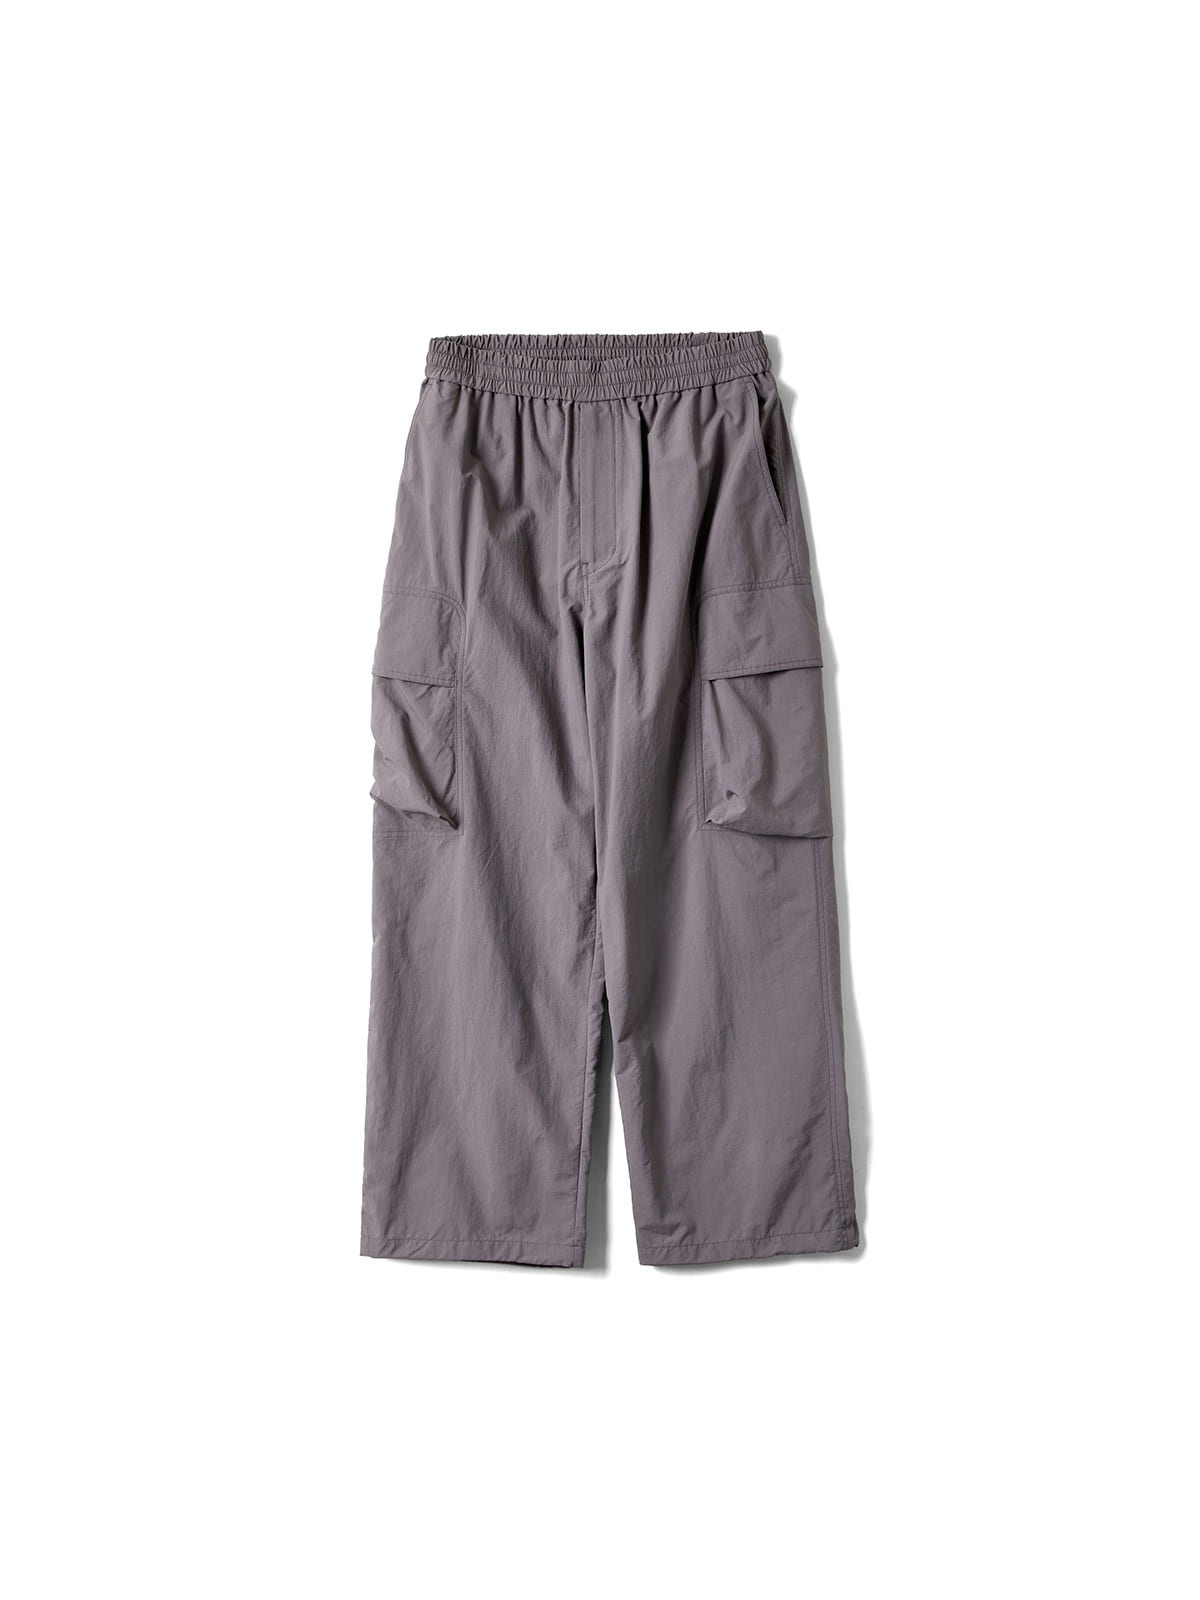 Undercover Coach Pants (Purple Grey)